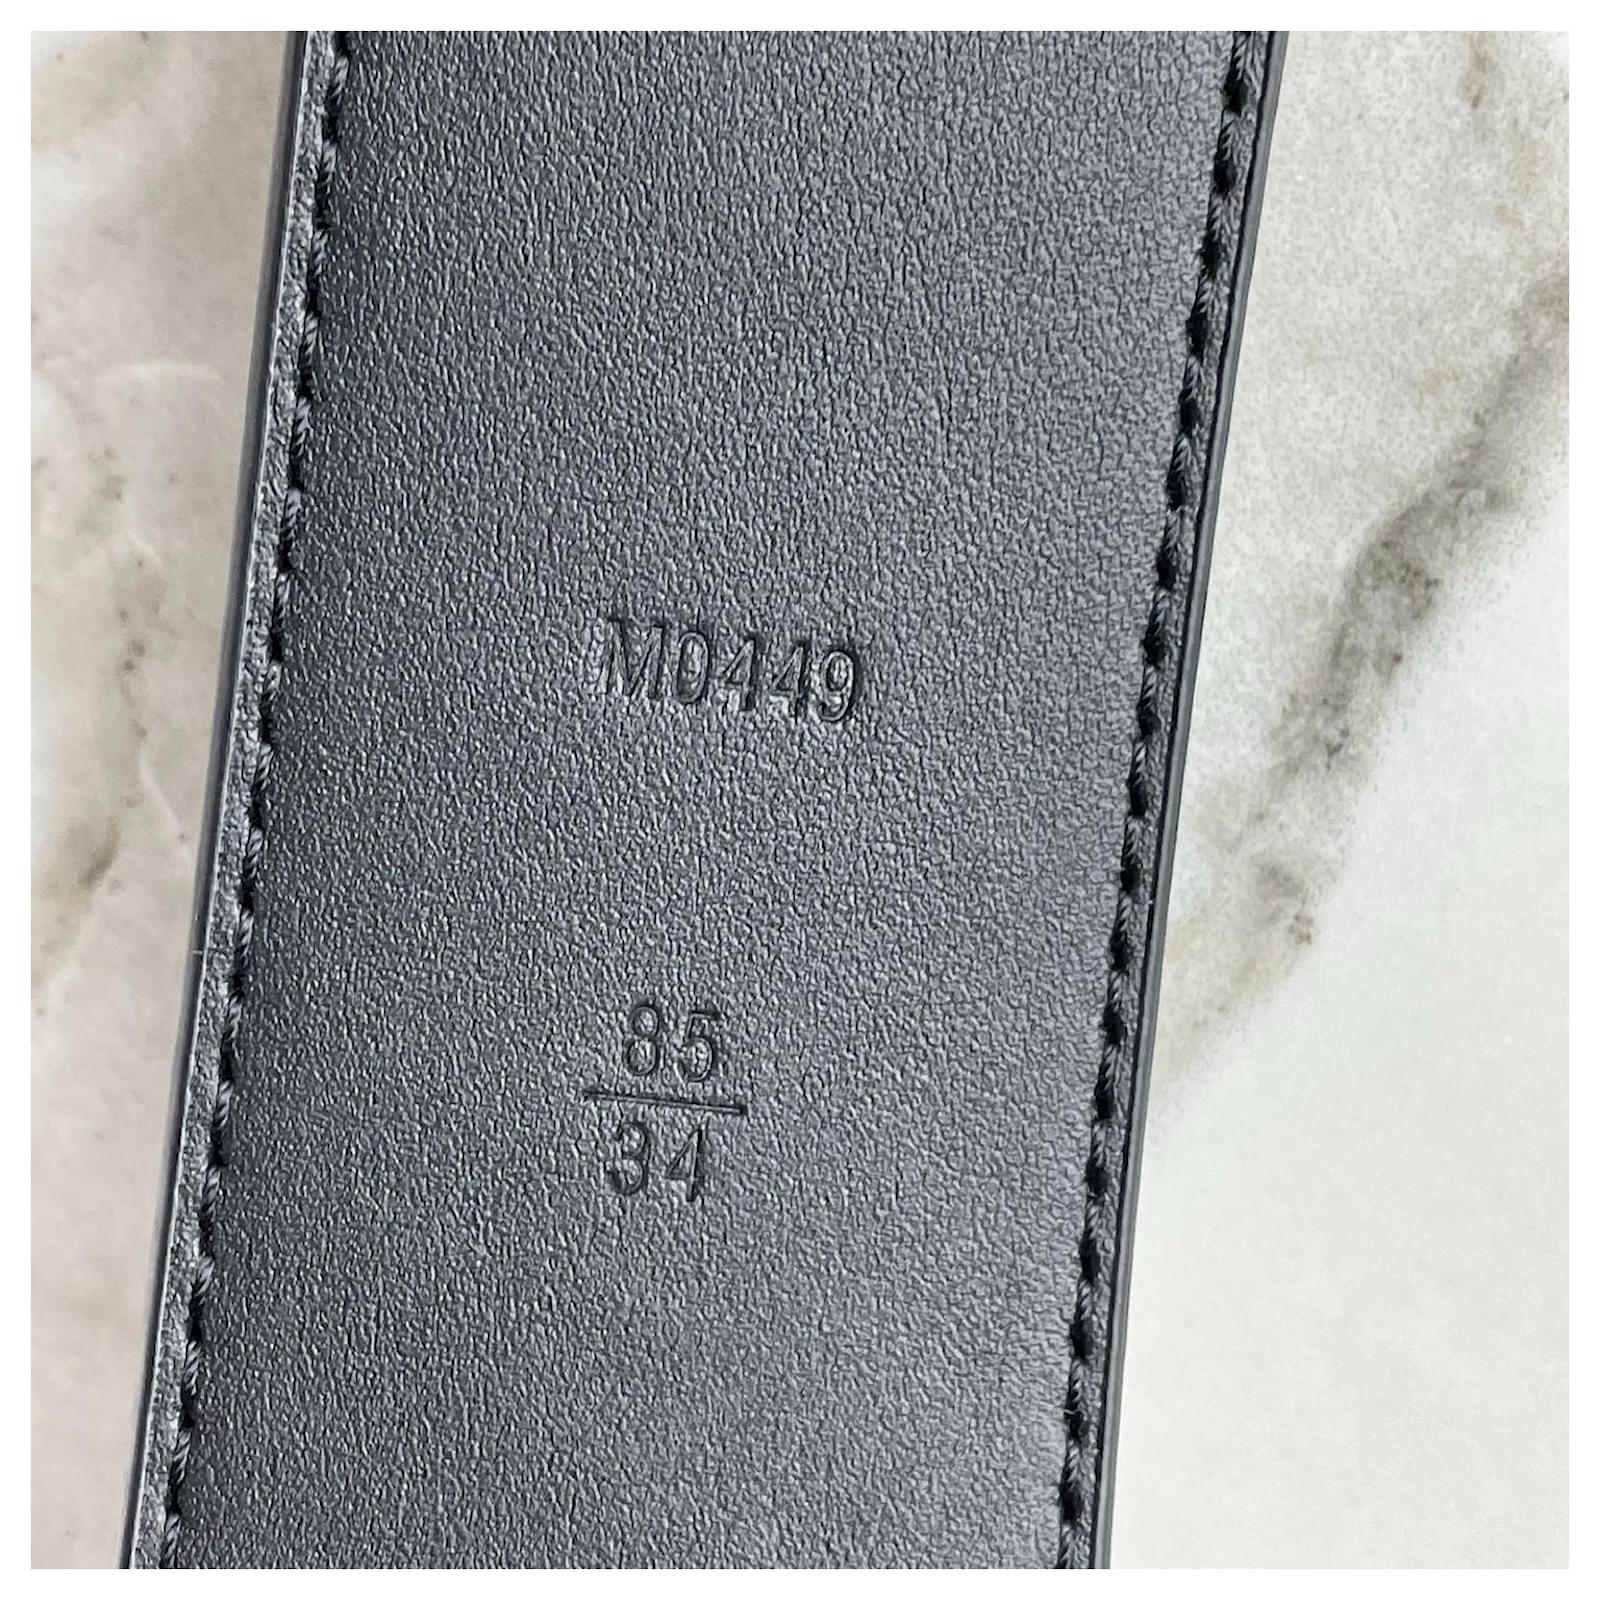 Cinturón con iniciales LV en negro mate de Louis Vuitton 40MM Gris